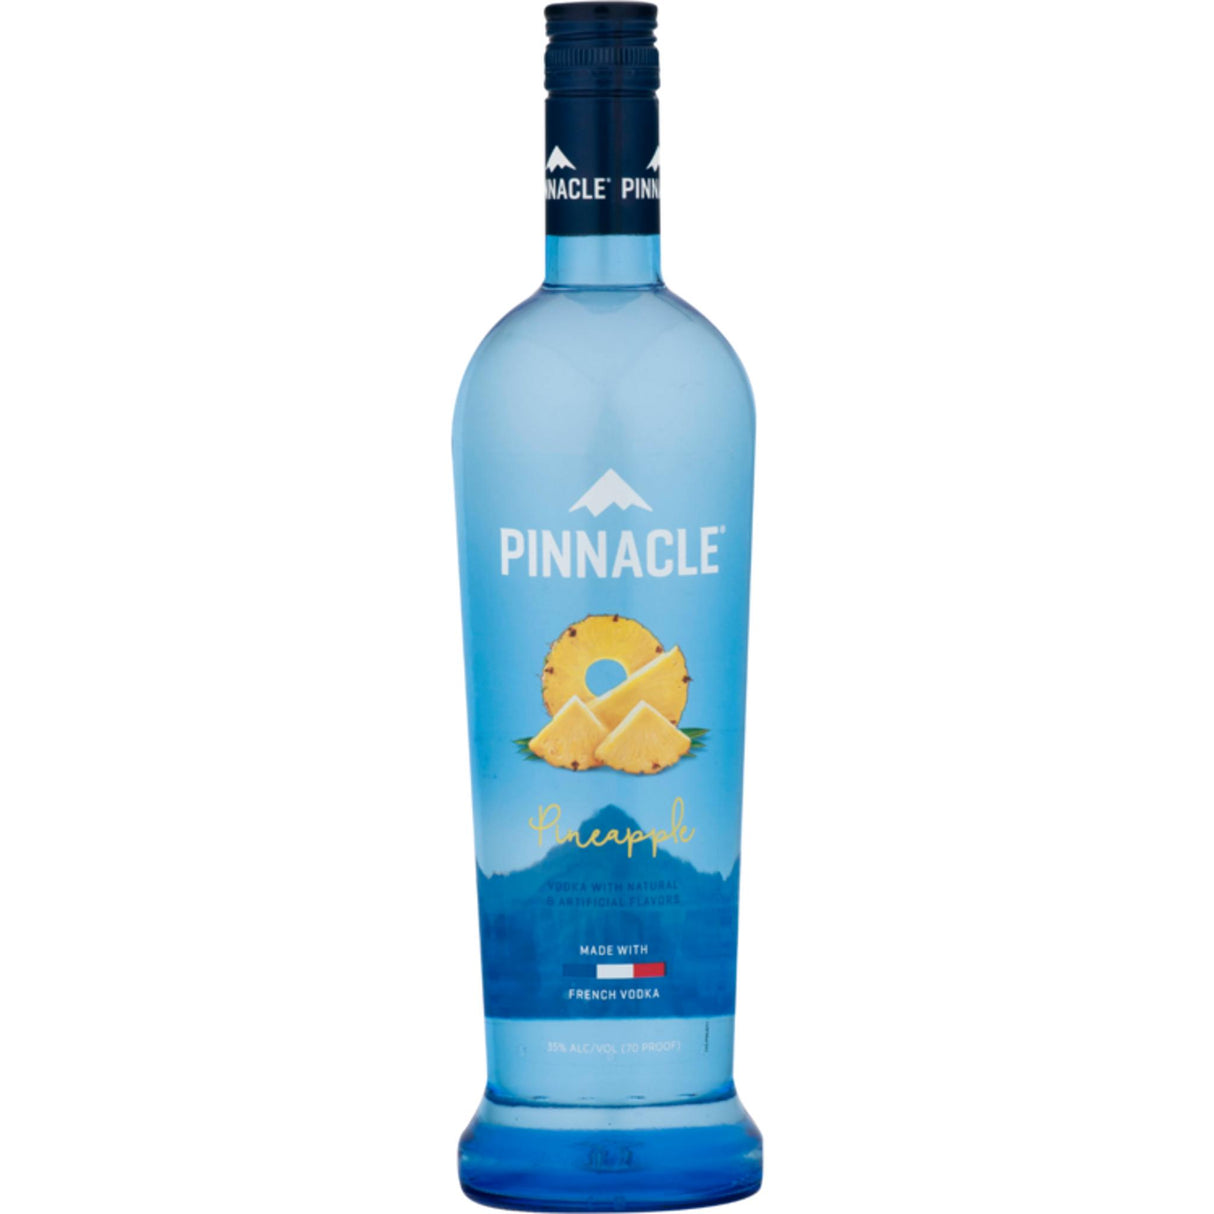 Pinnacle Pineapple Flavored Vodka - Liquor Geeks